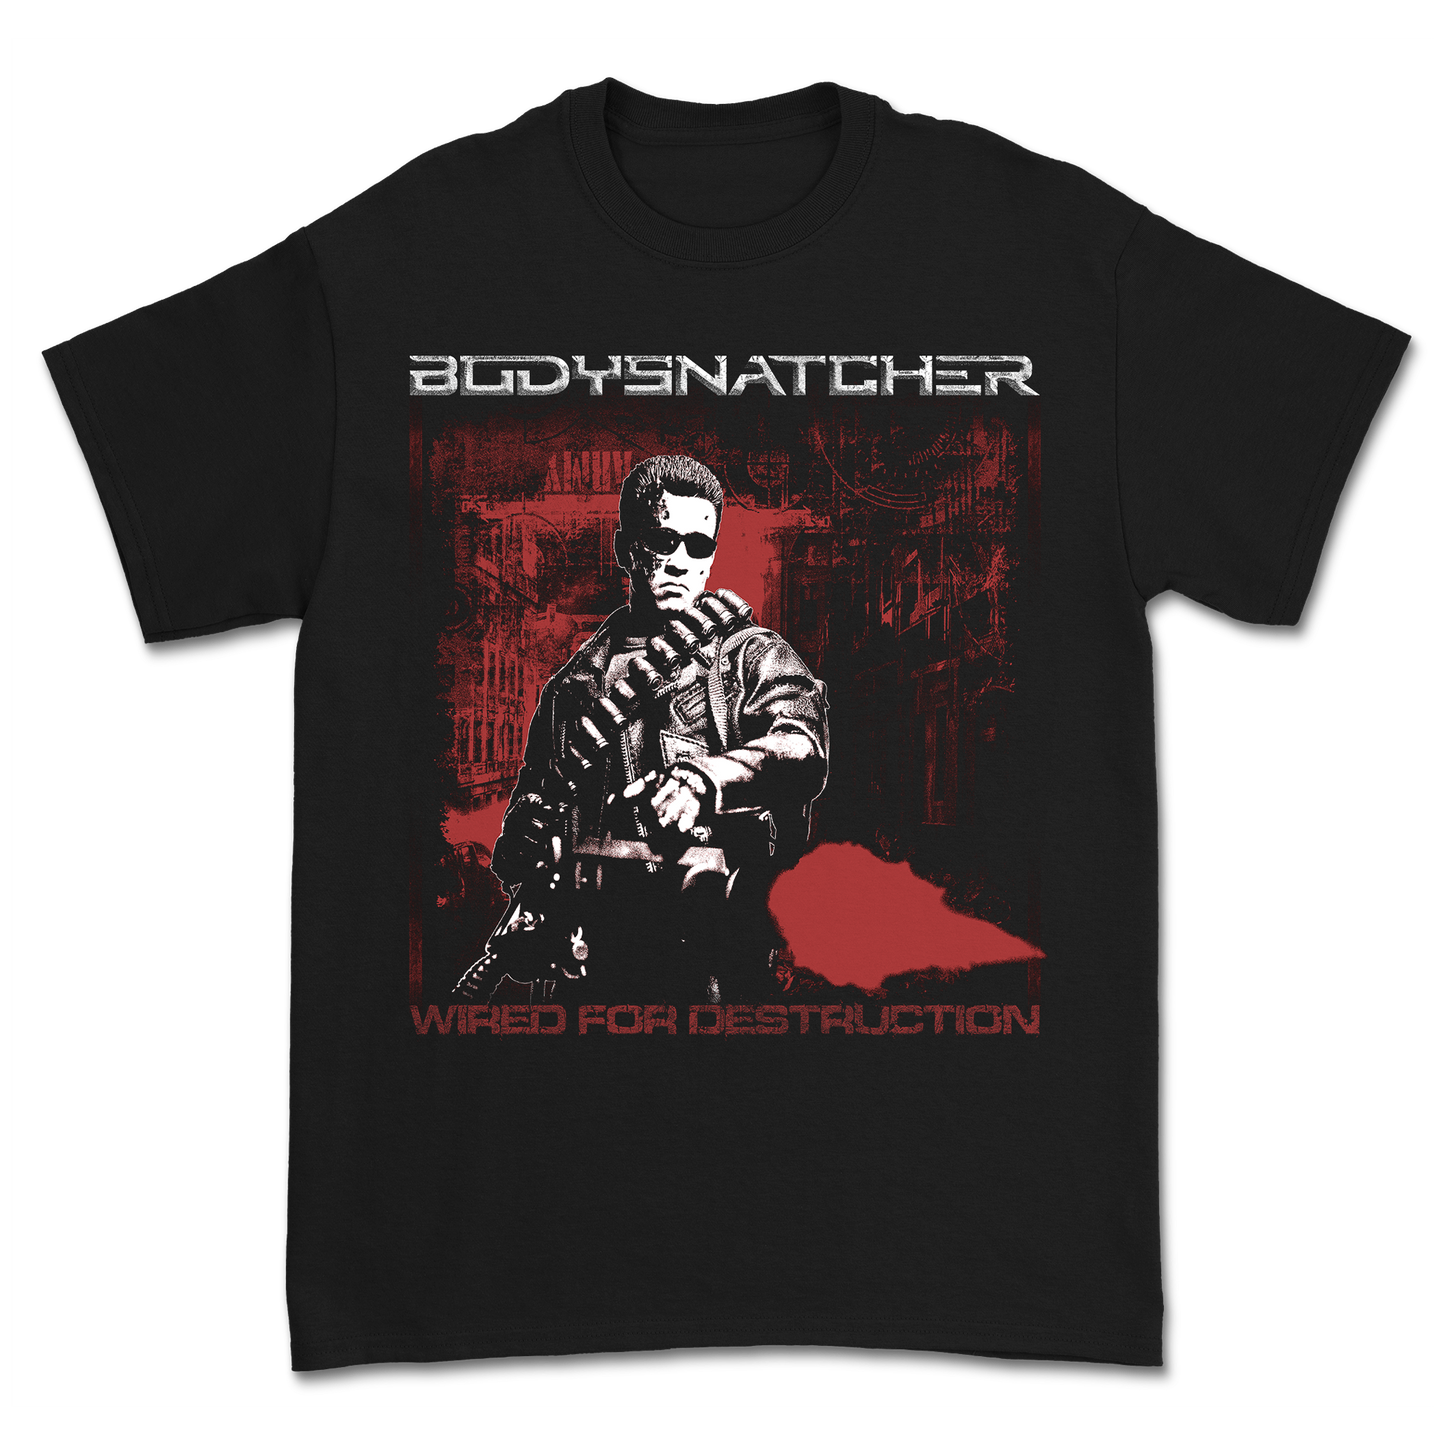 Terminator T-Shirt